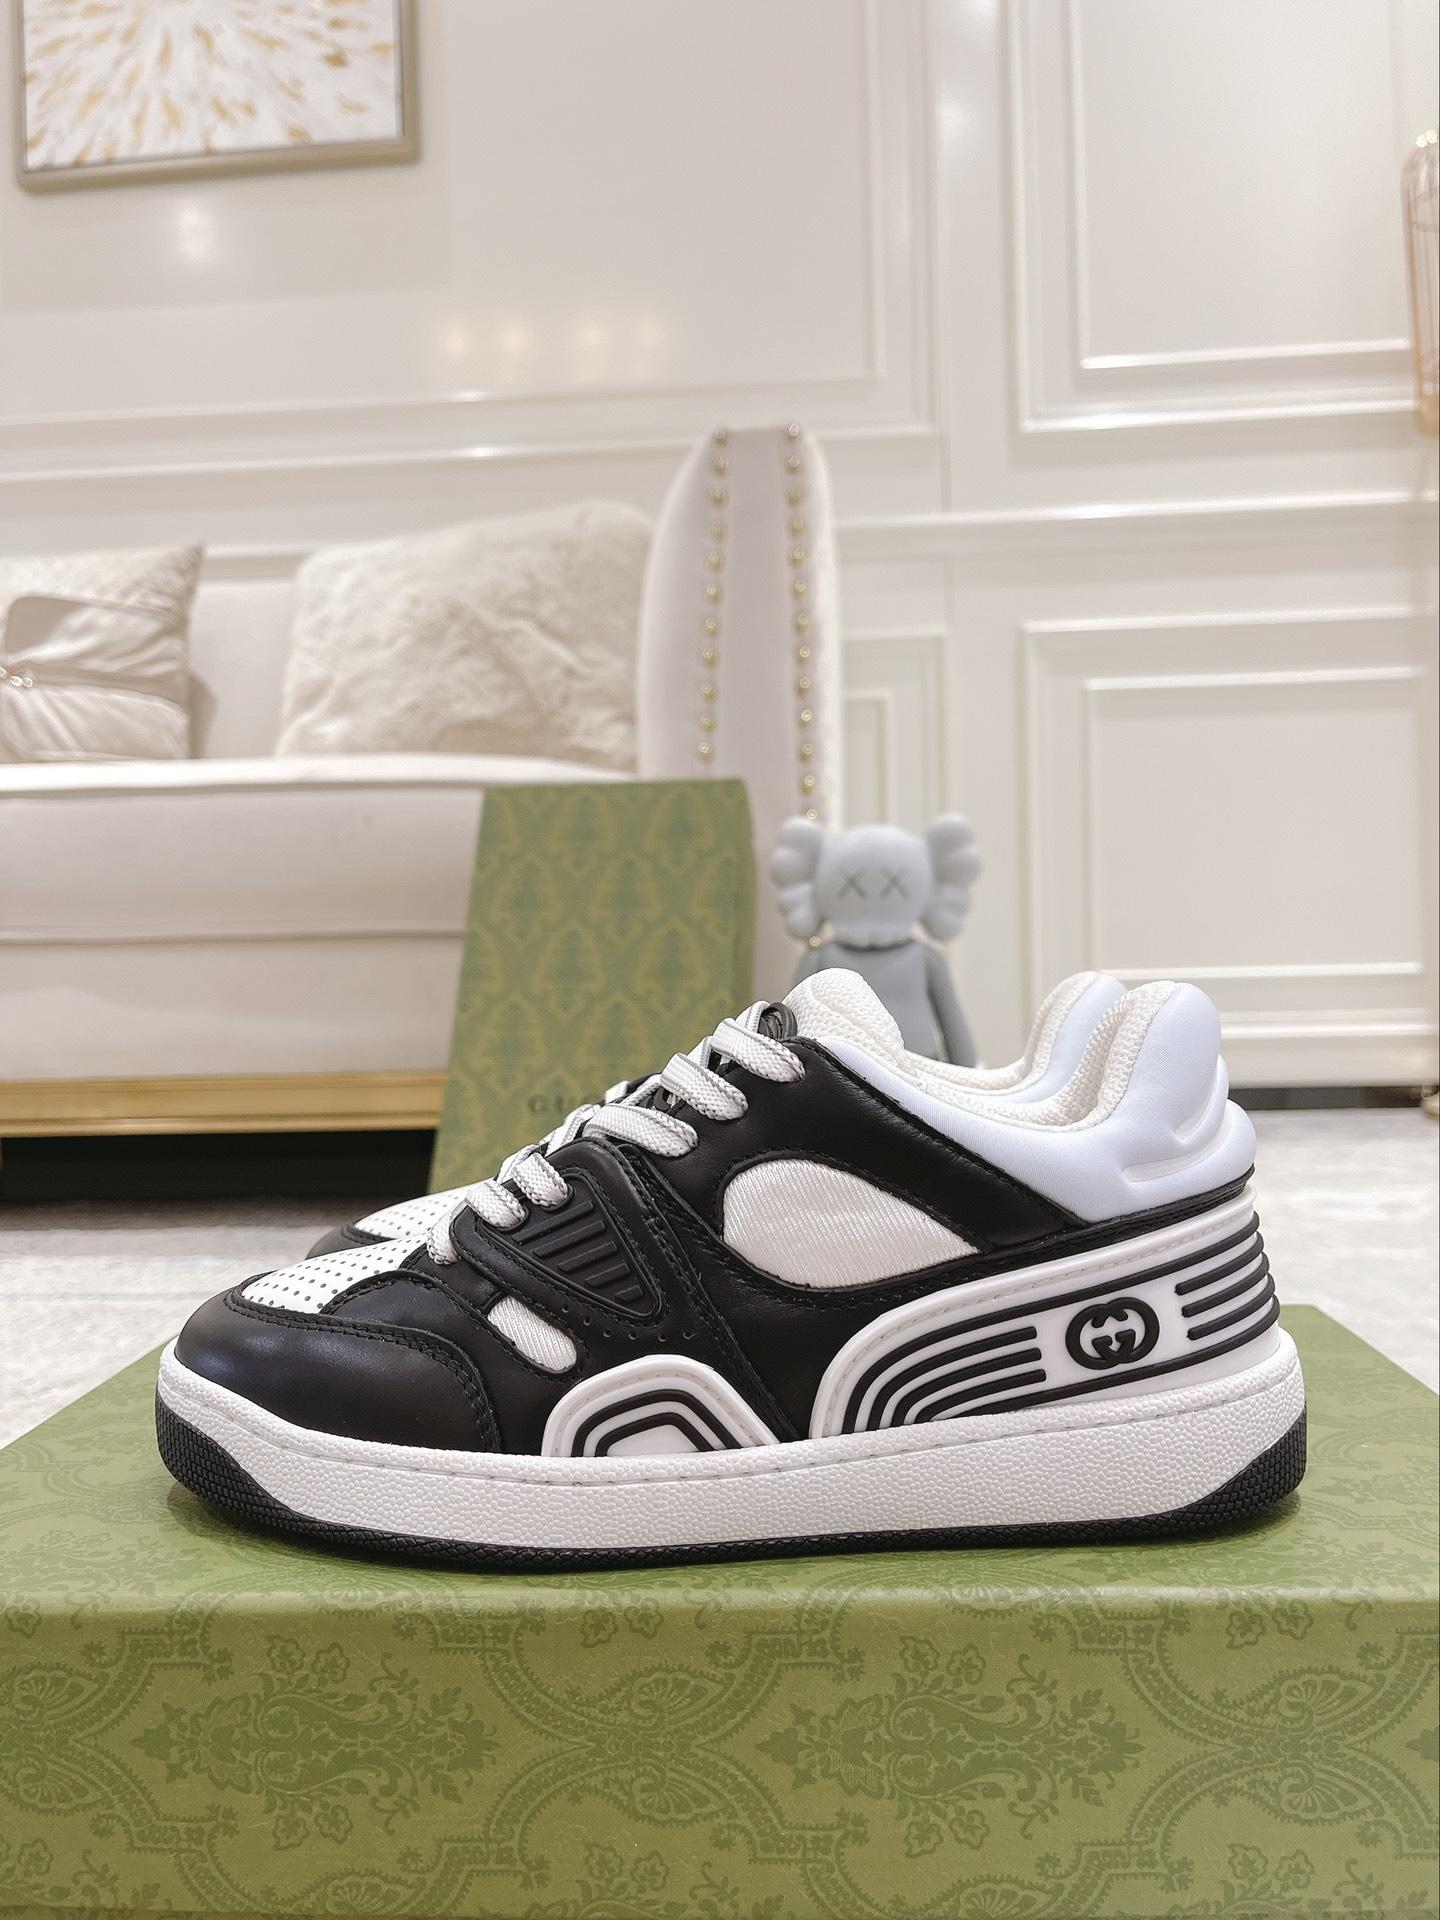 gucci-basket-sneaker-5366_16844013232-1000